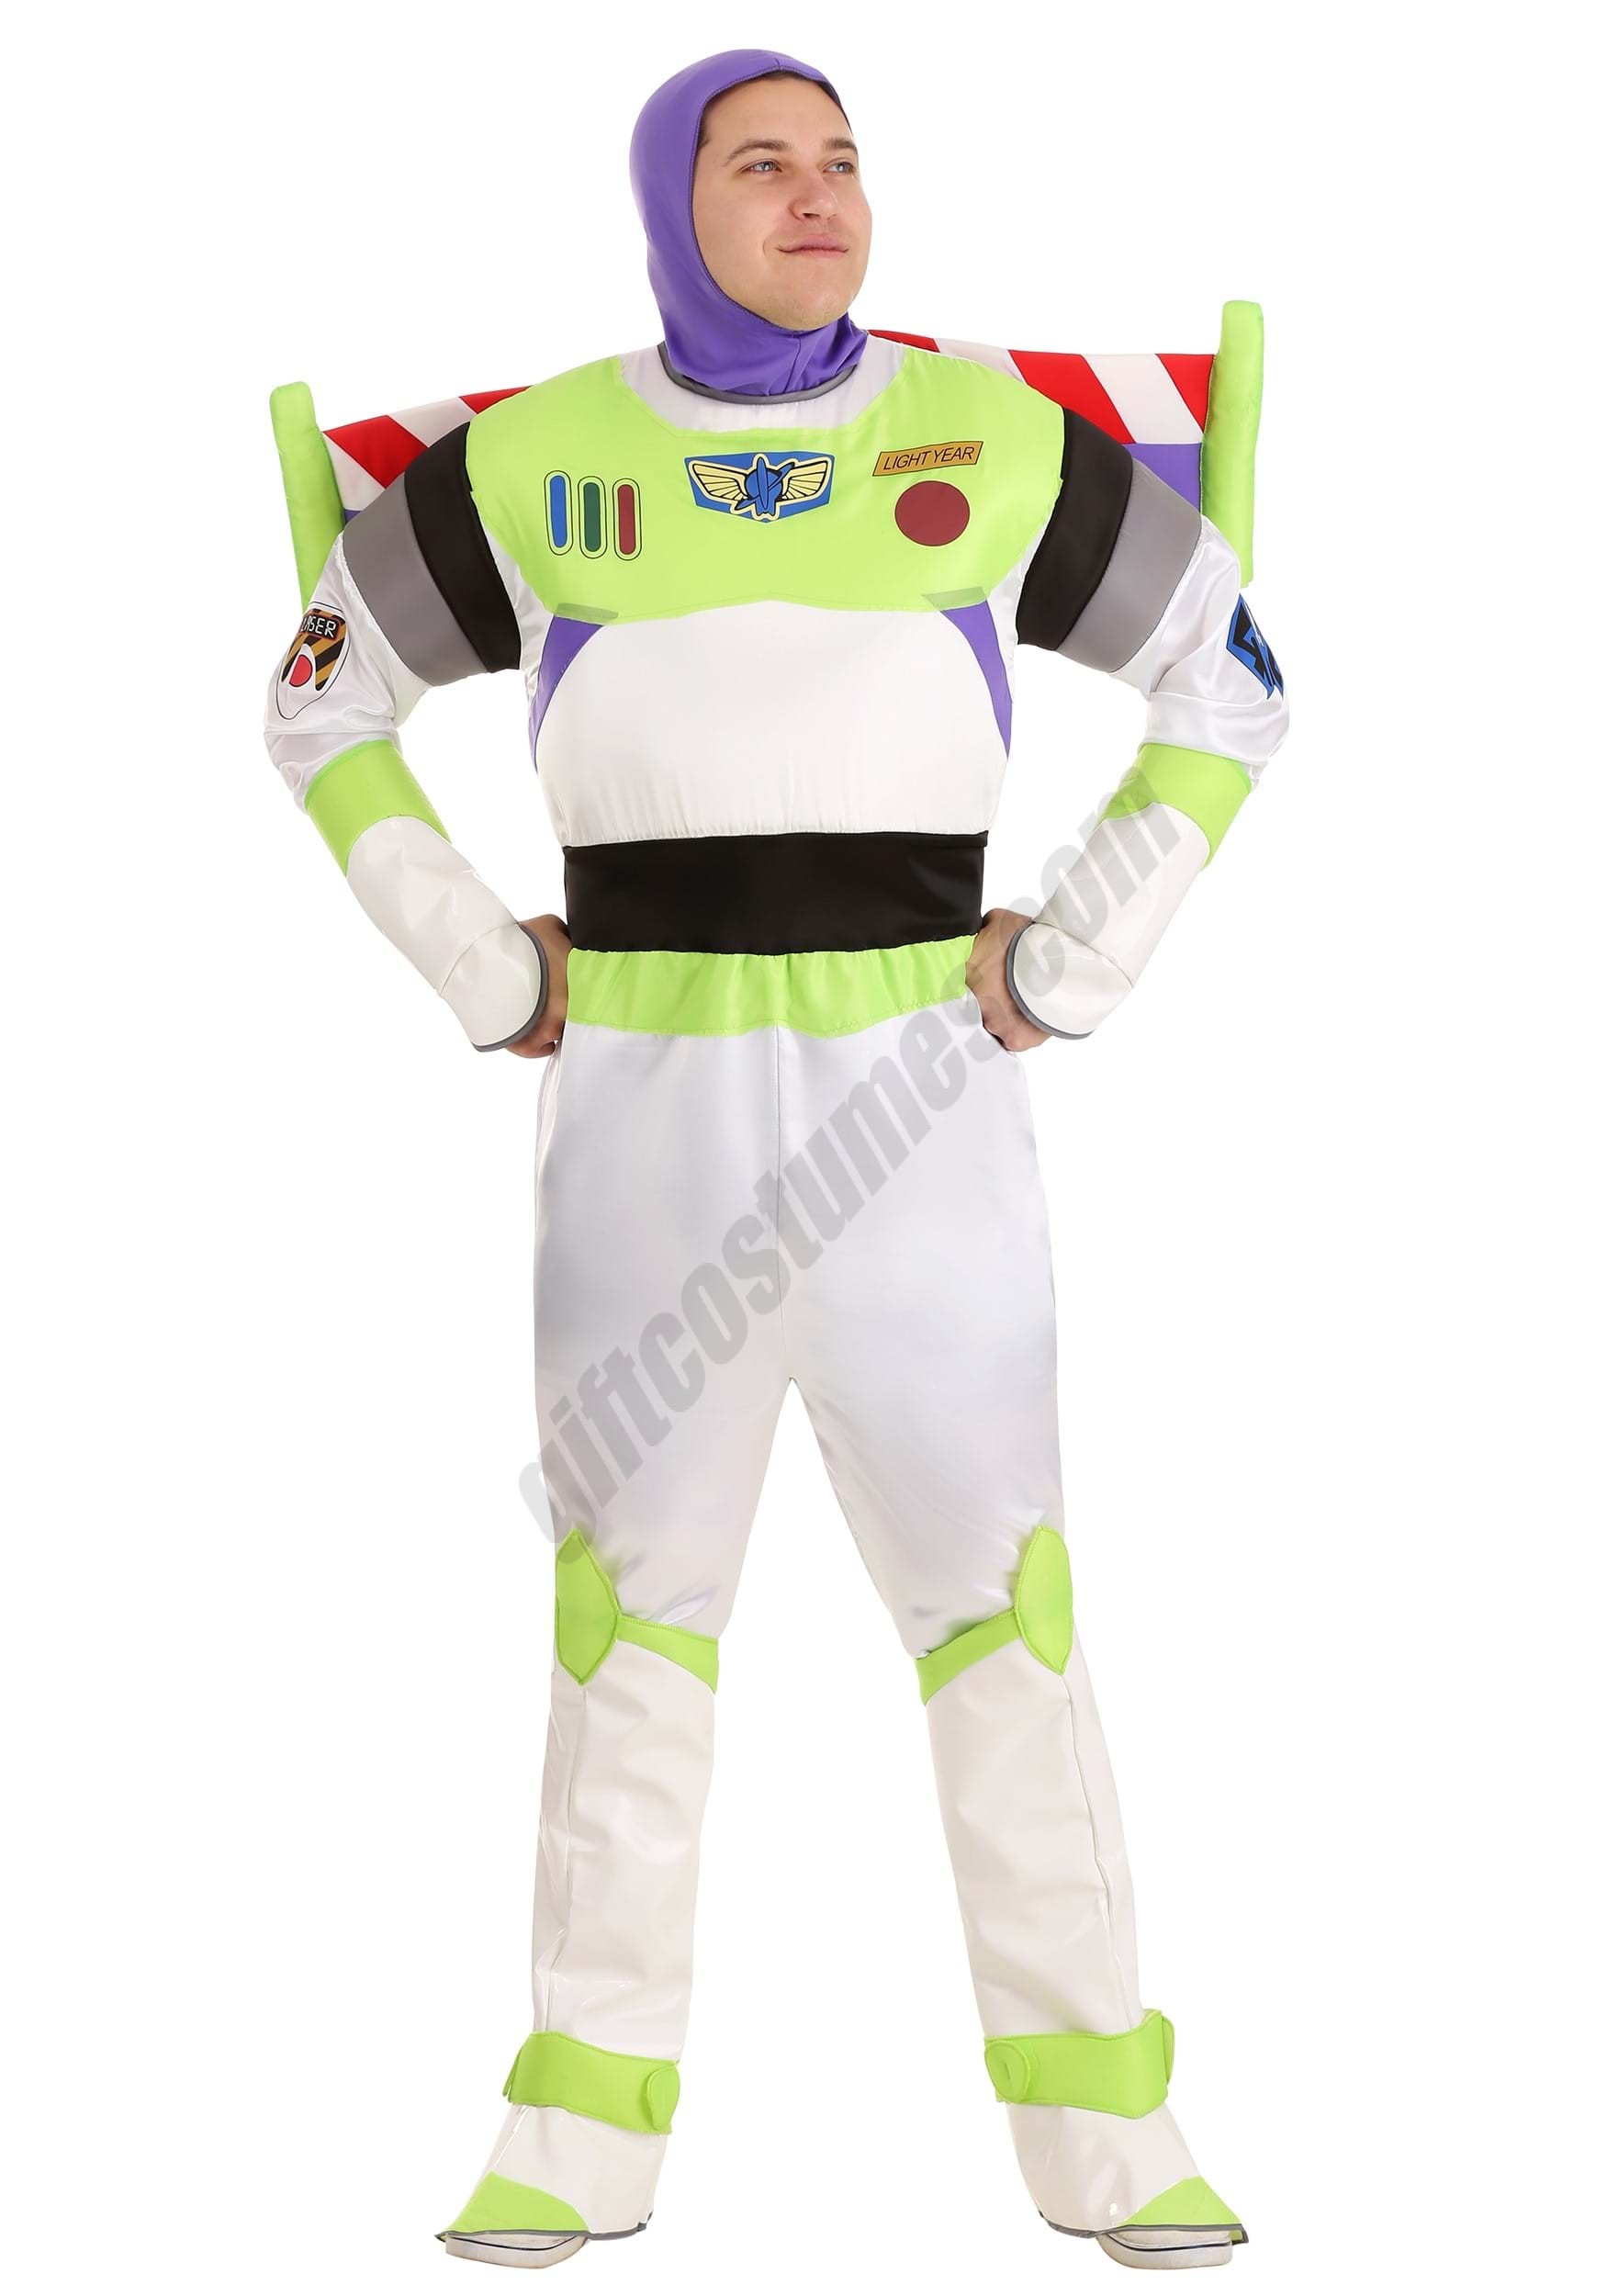 Prestige Buzz Lightyear Costume for Adult Men Promotions - Prestige Buzz Lightyear Costume for Adult Men Promotions